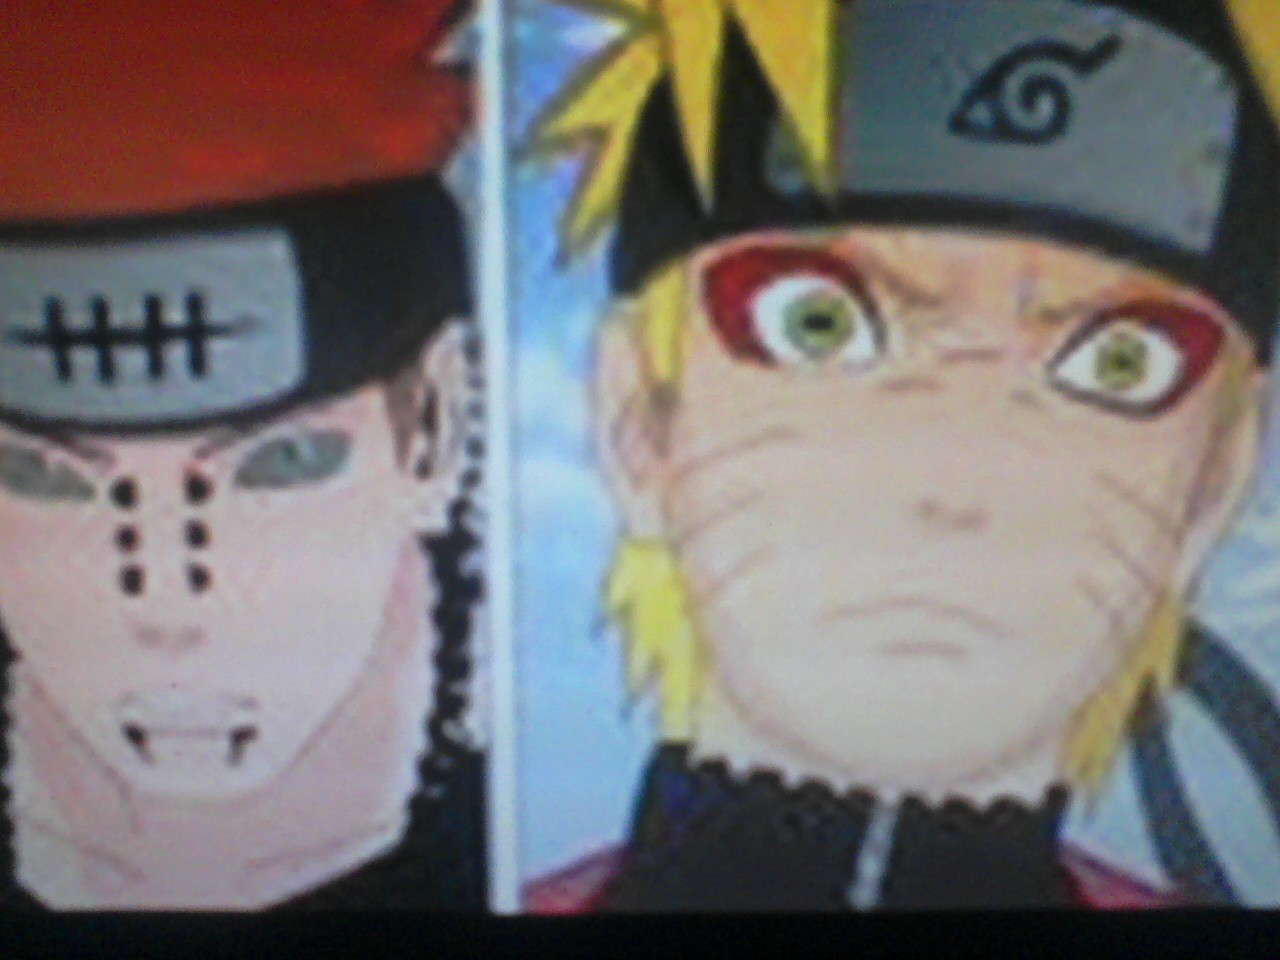 Naruto VS Pain wallpaper   ForWallpapercom